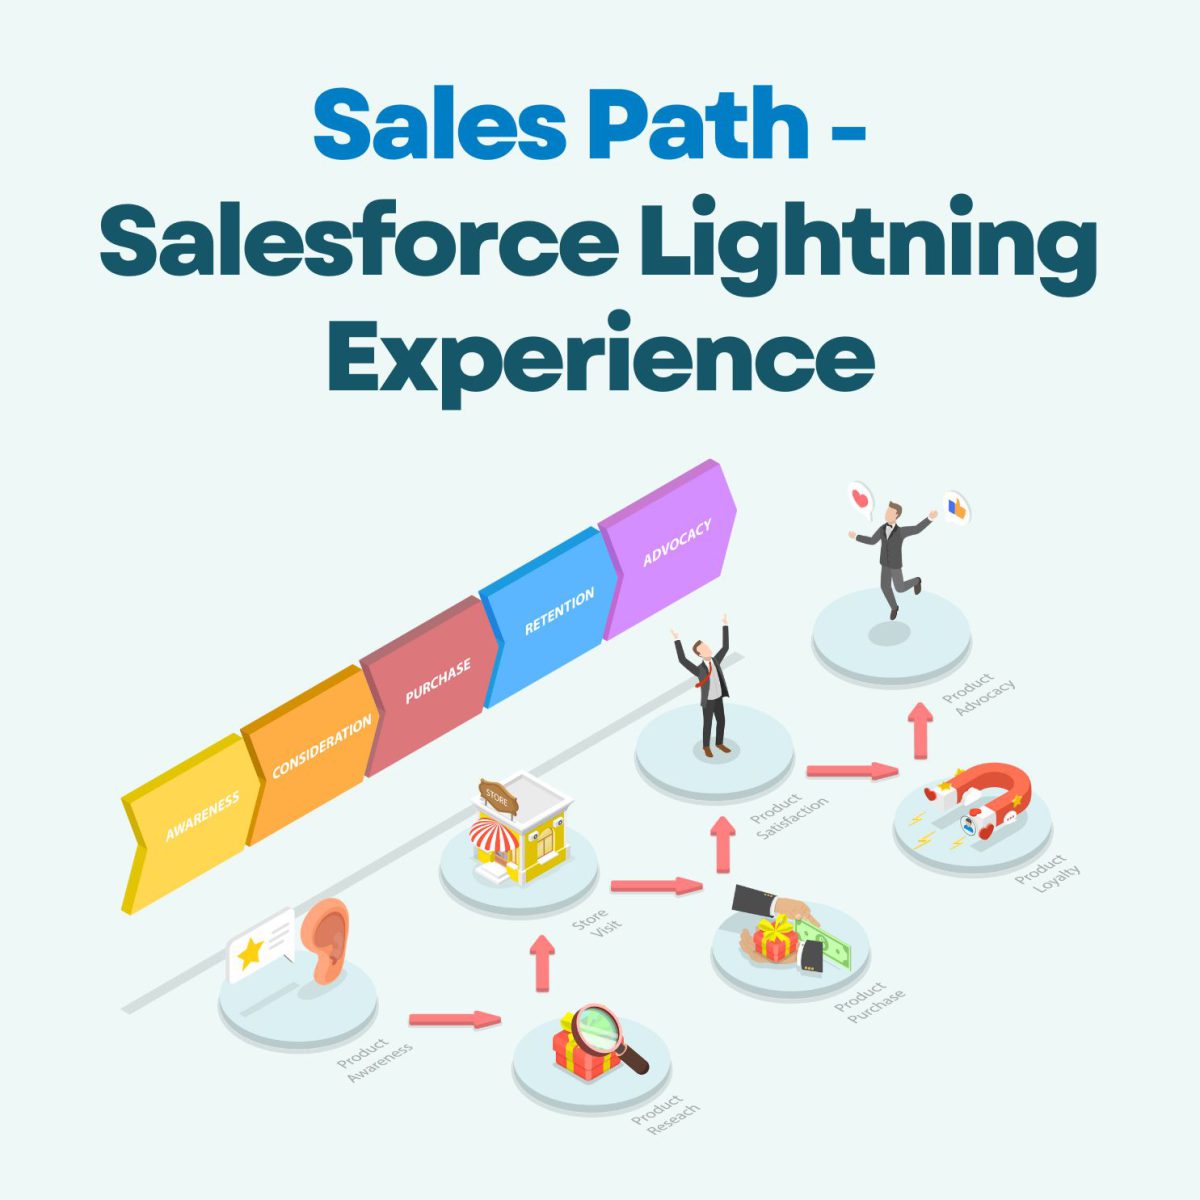 Sales Path -Salesforce Lightning Experience